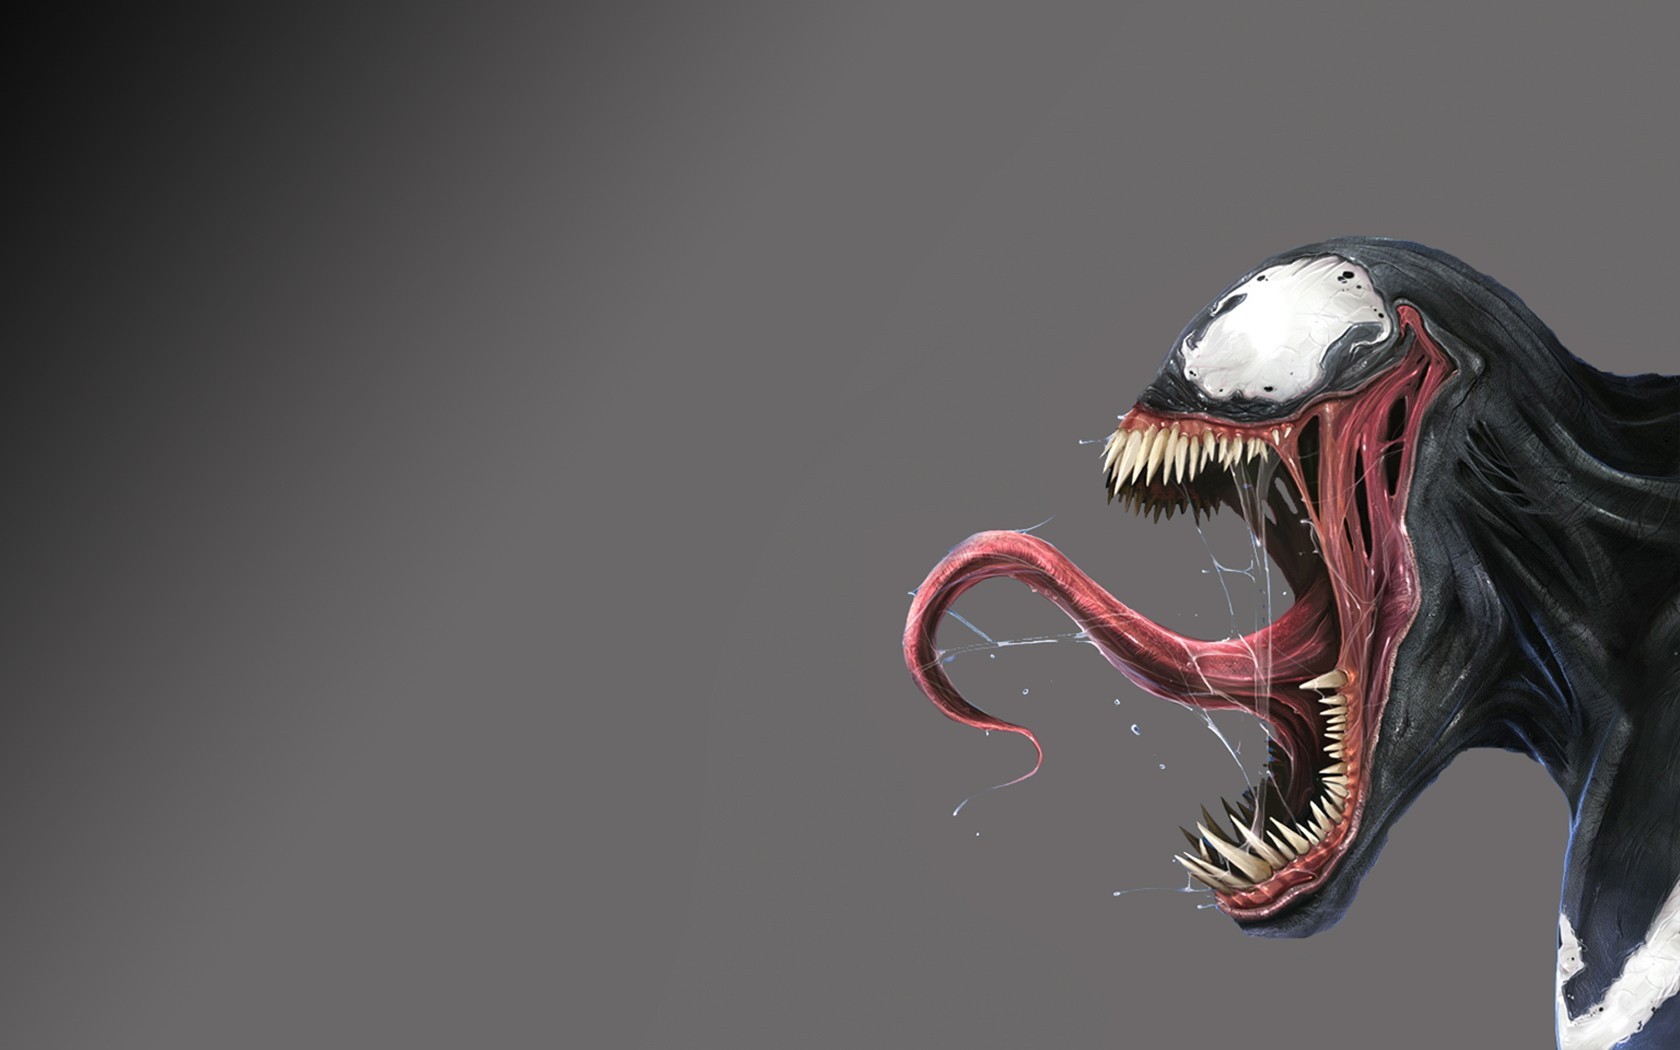 General 1680x1050 Venom gray background villain creature digital art simple background render CGI tongues